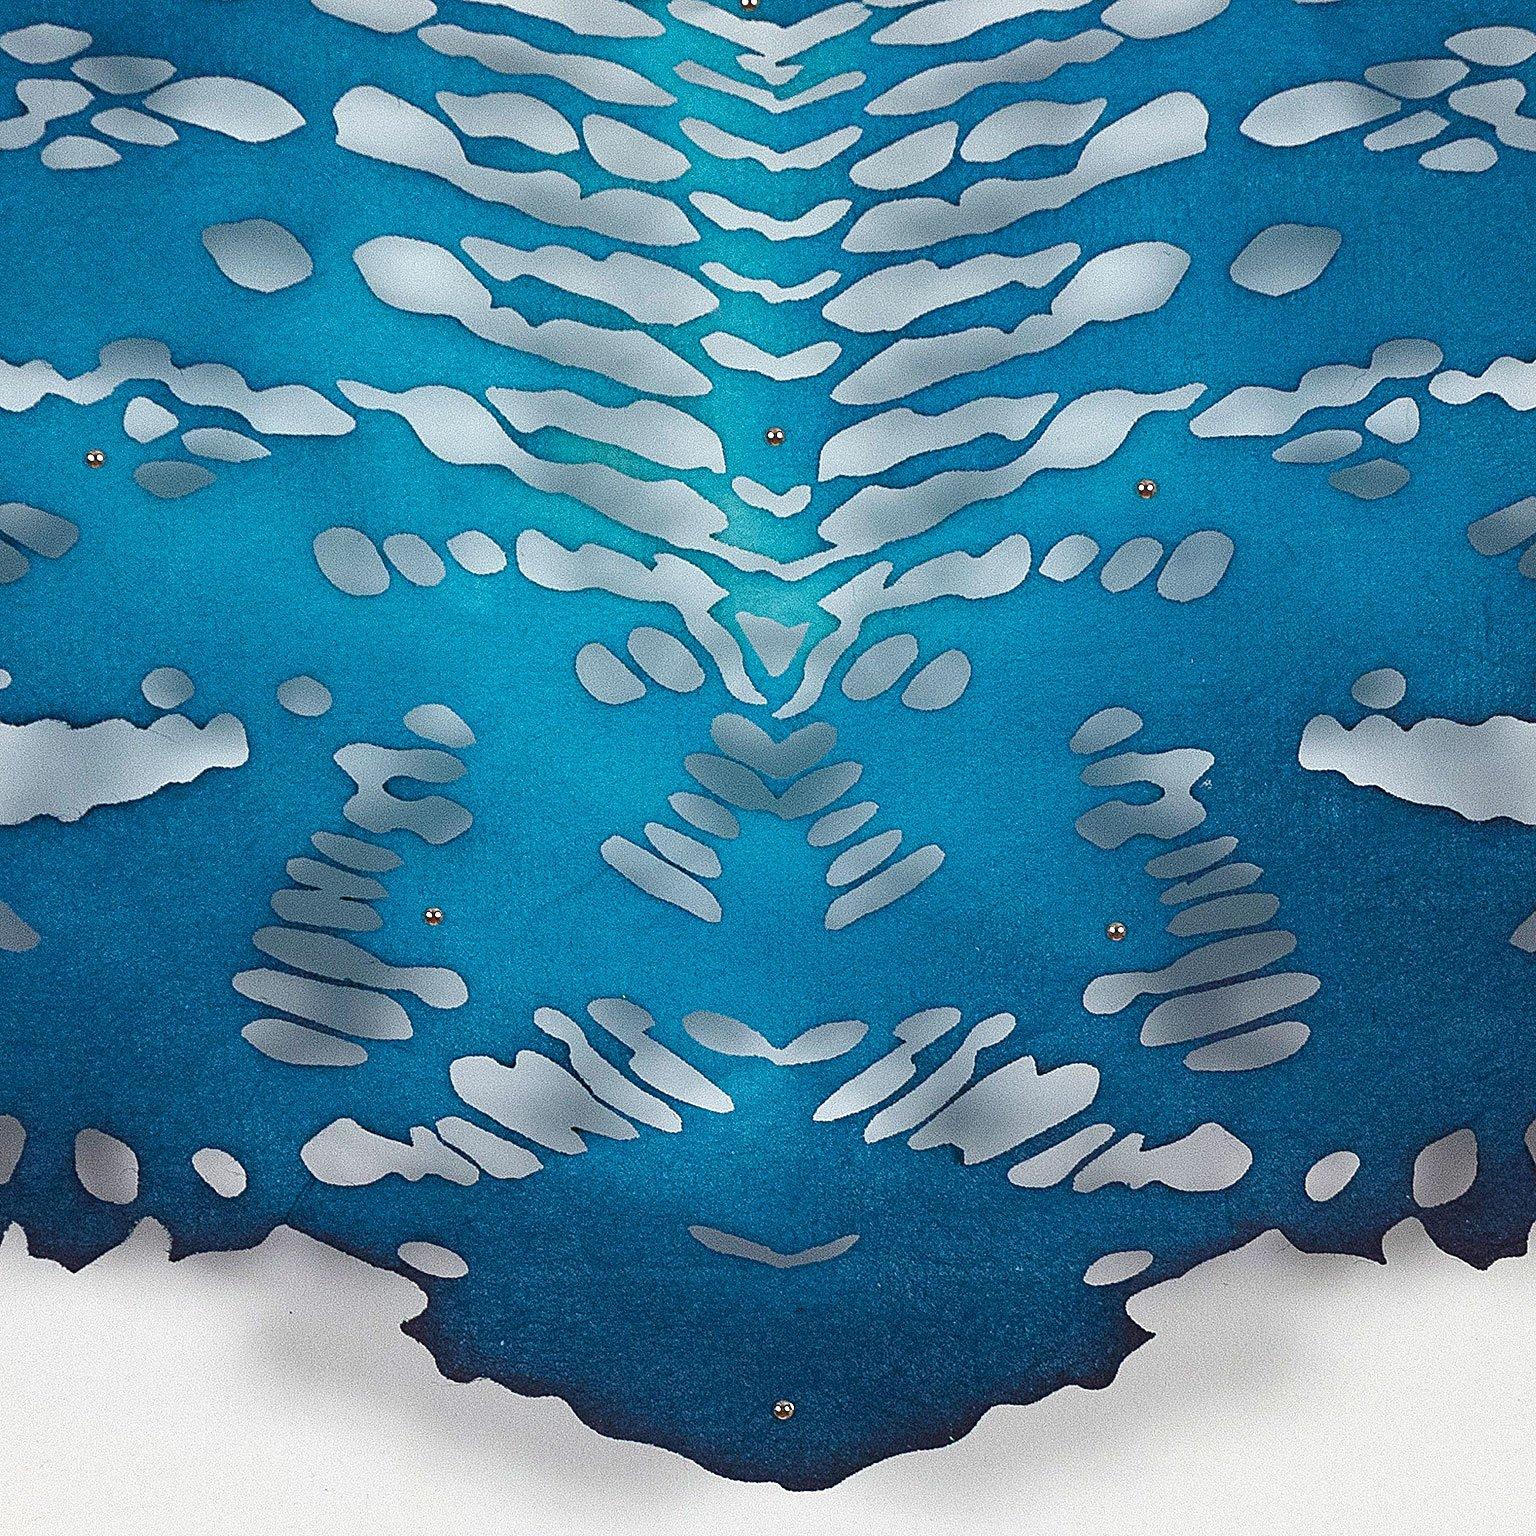 Blue Apatite - Contemporary Mixed Media Art by Lizz Aston